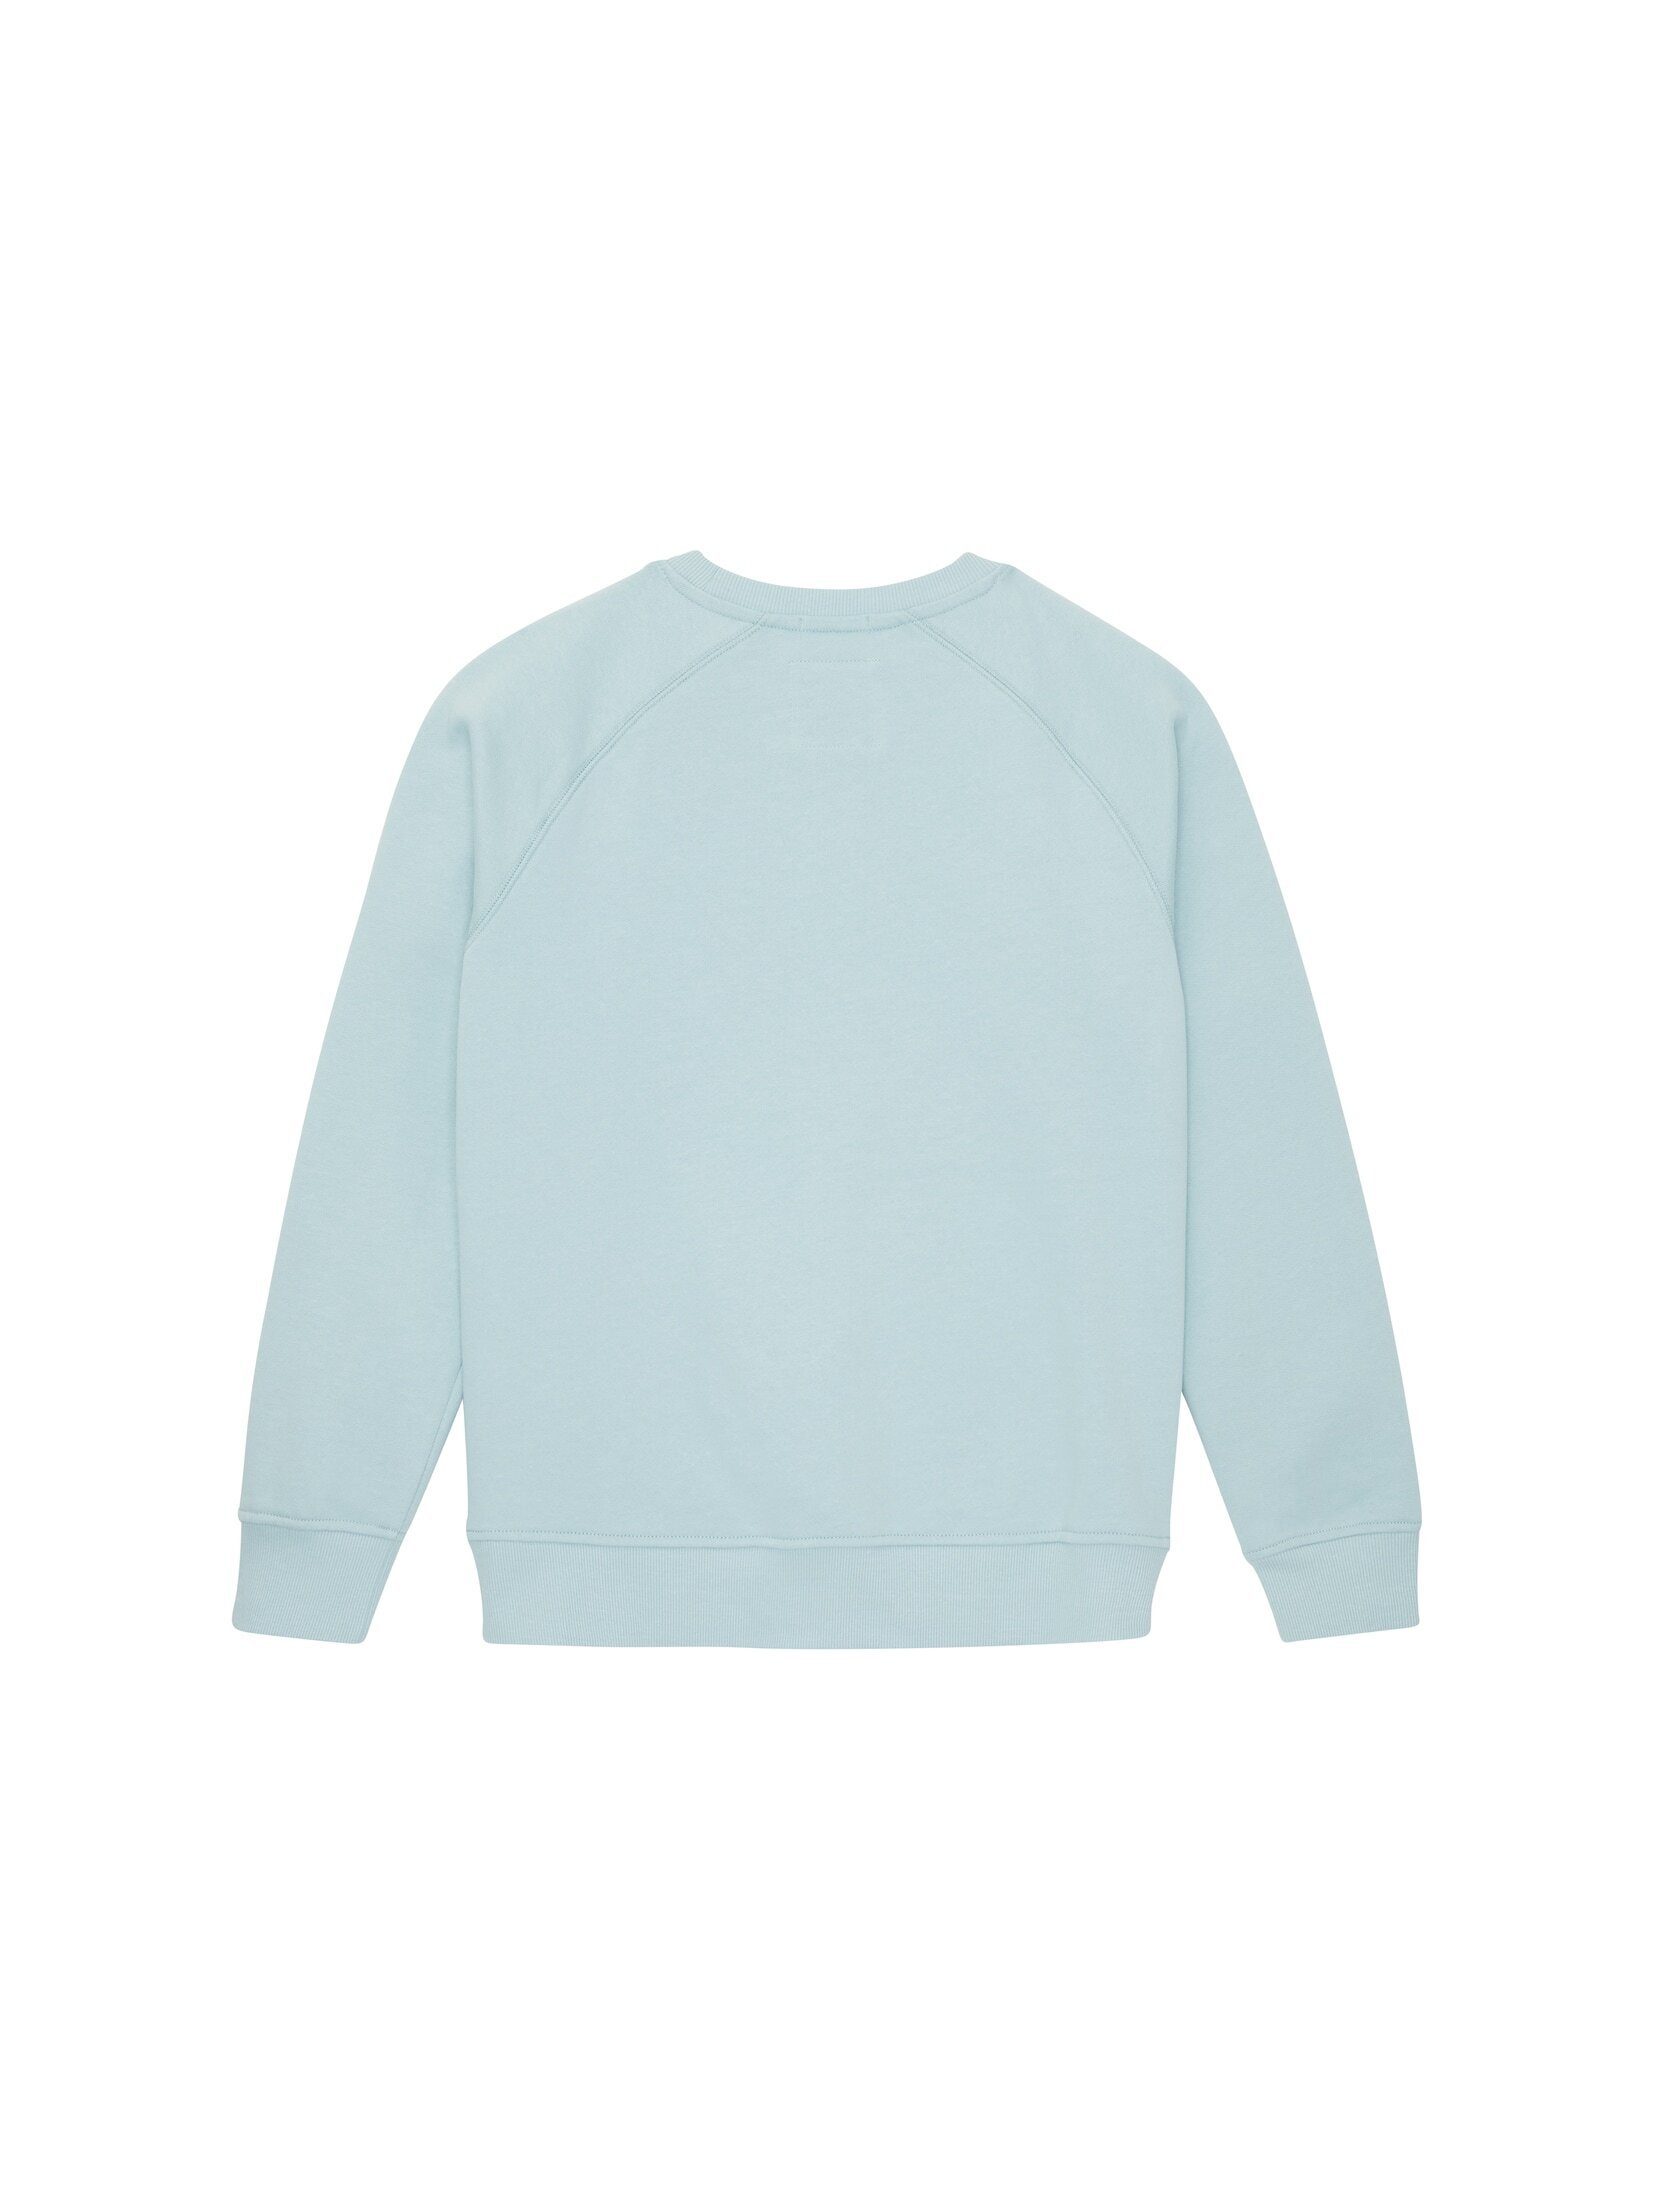 TAILOR TOM Sweatshirt blue mint dusty Oversized mit Hoodie Print